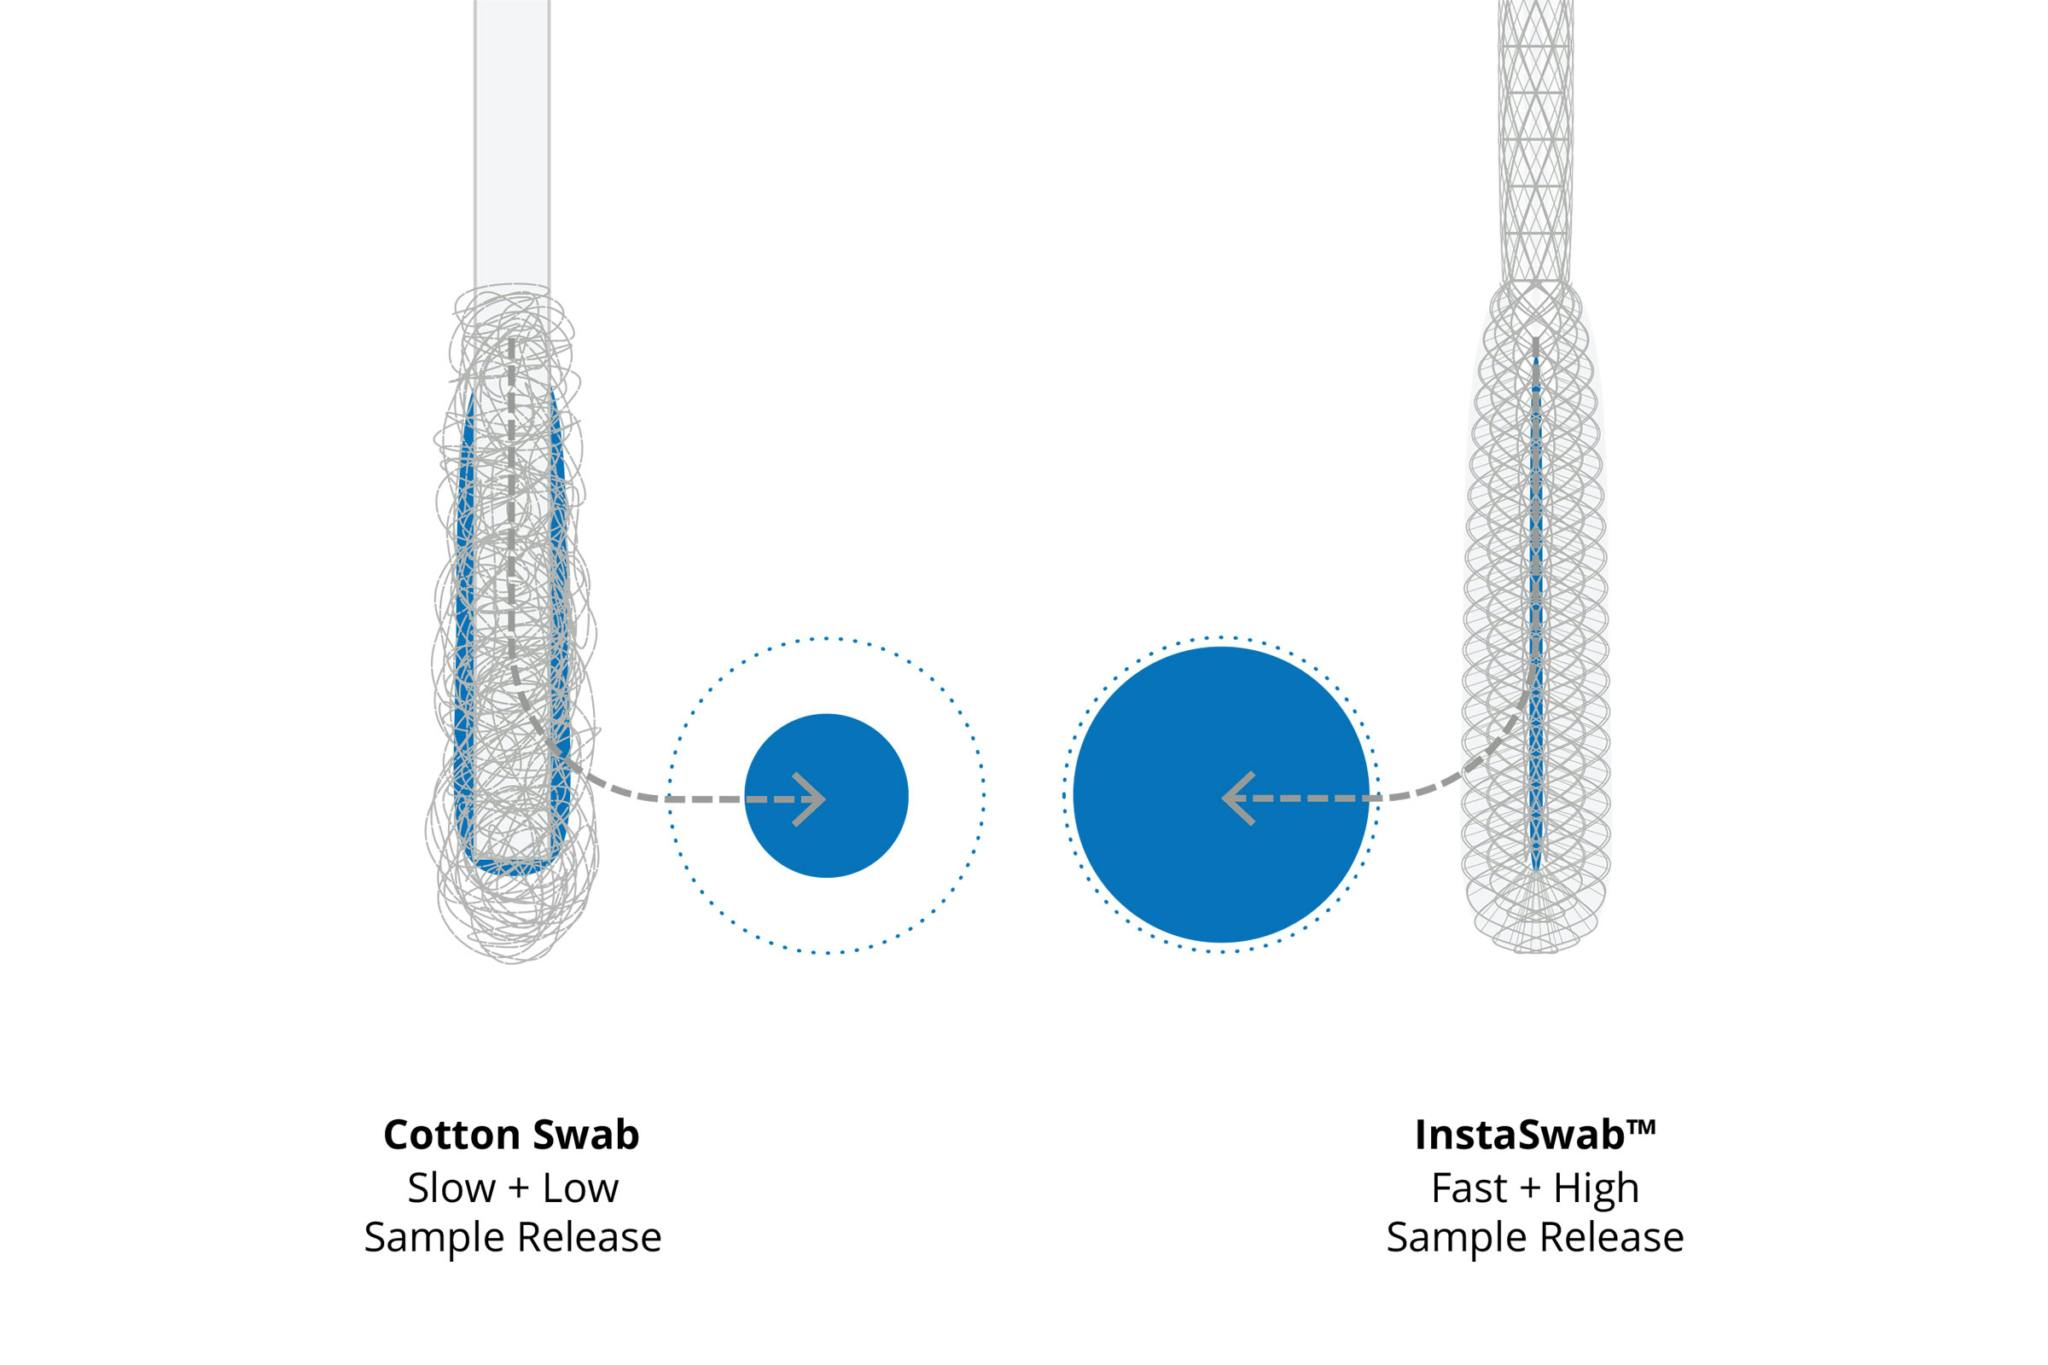 Cotton swab vs Instaswab sample release